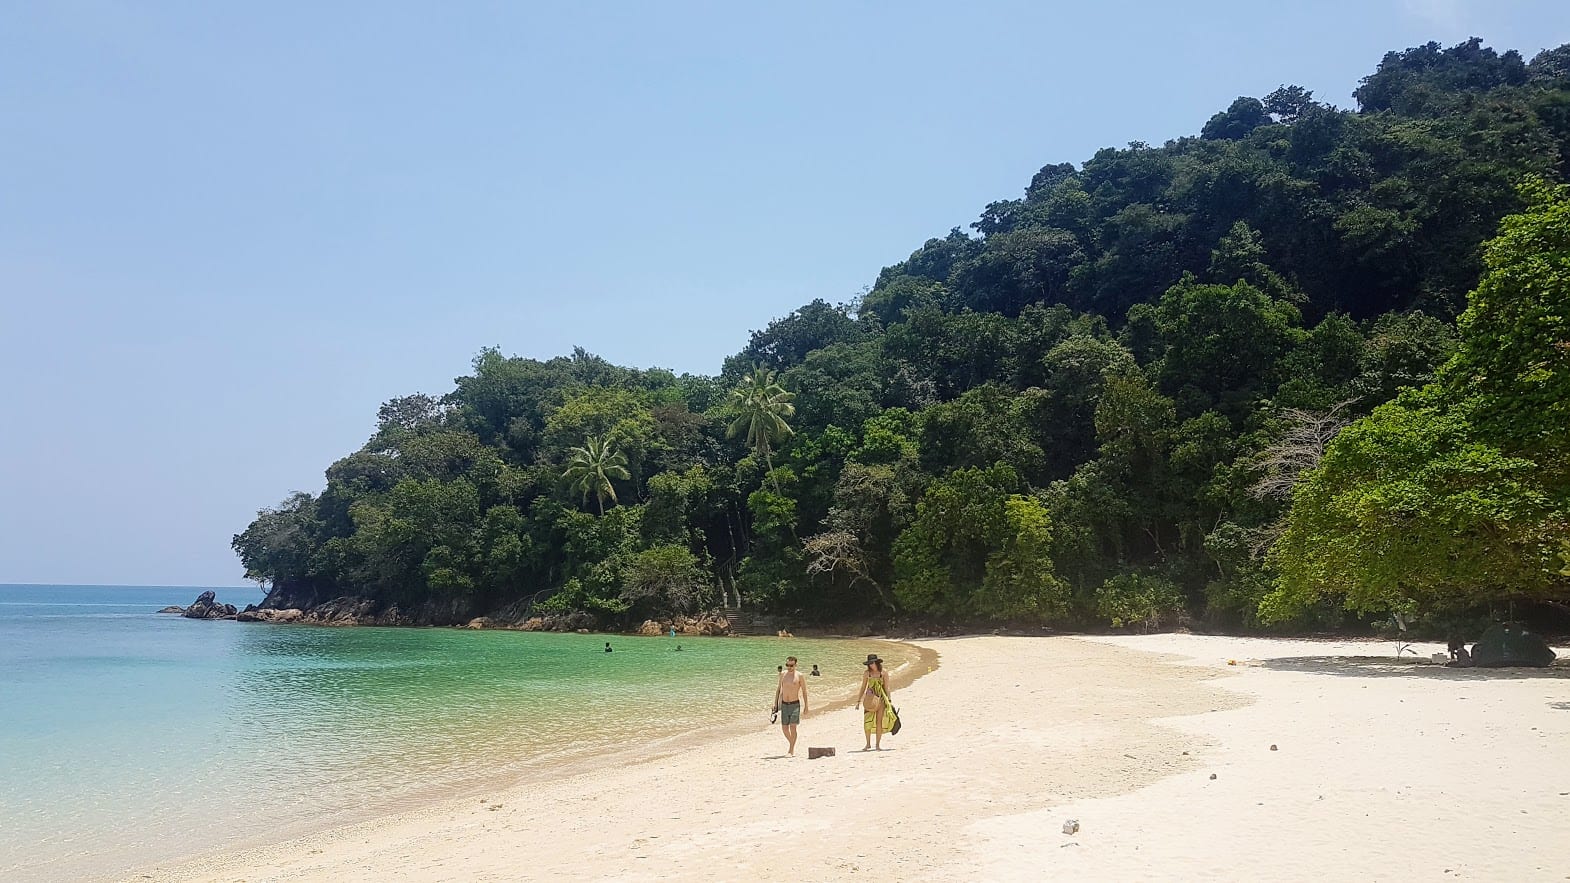 Trip Sehari Pulau Kapas Malaysia - Semua Yang Perlu Anda Ketahui